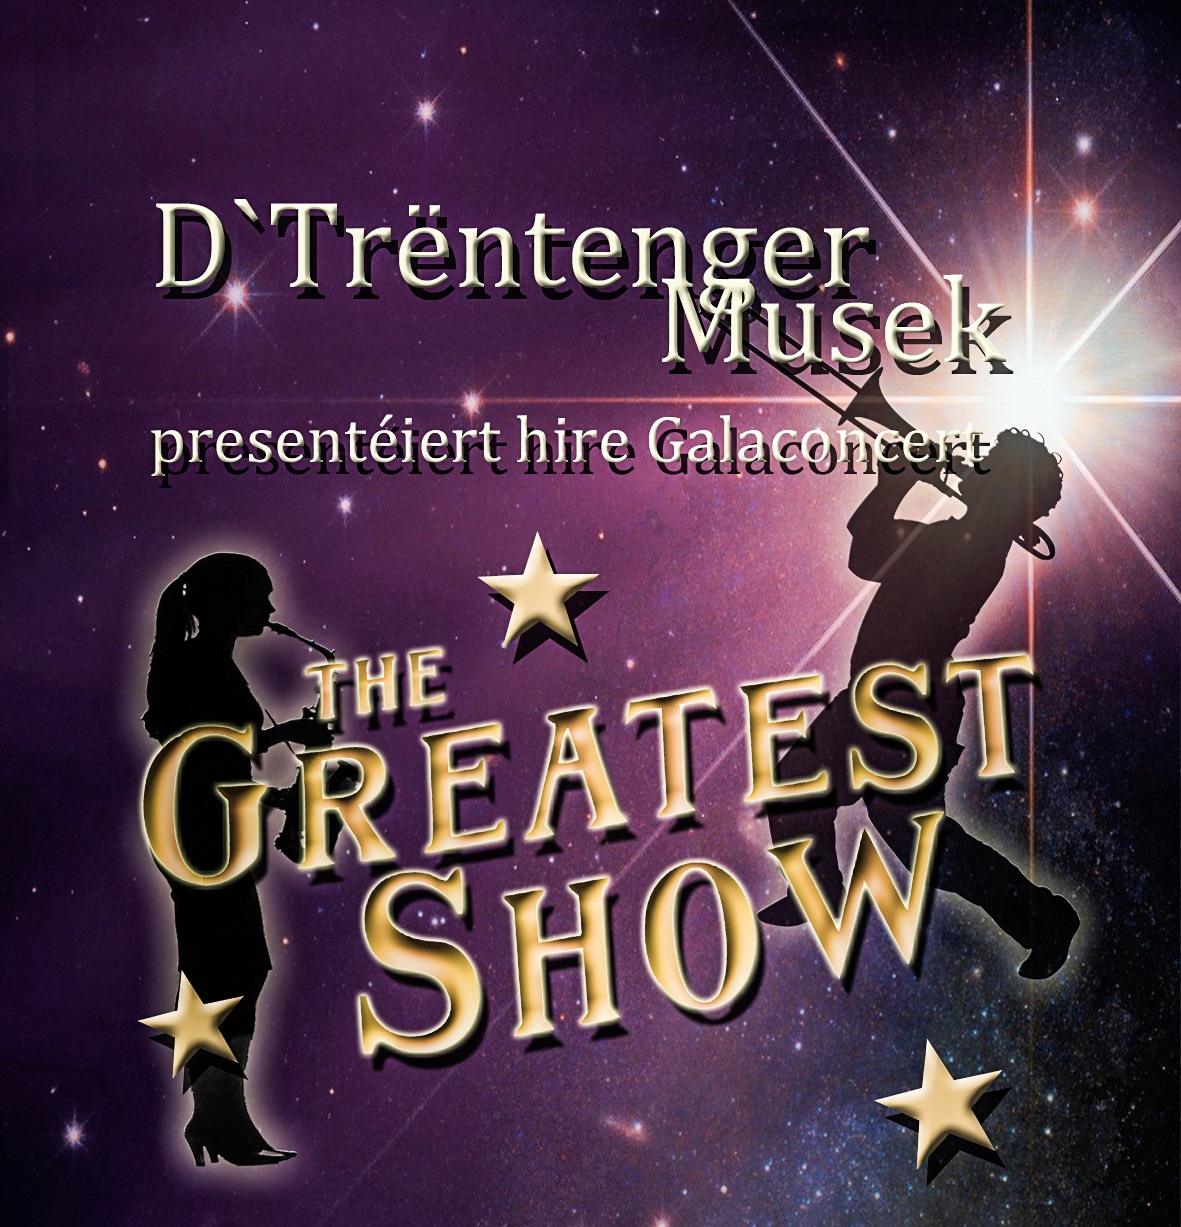 The greatest show – Galaconcert, den 8. Juni 2019